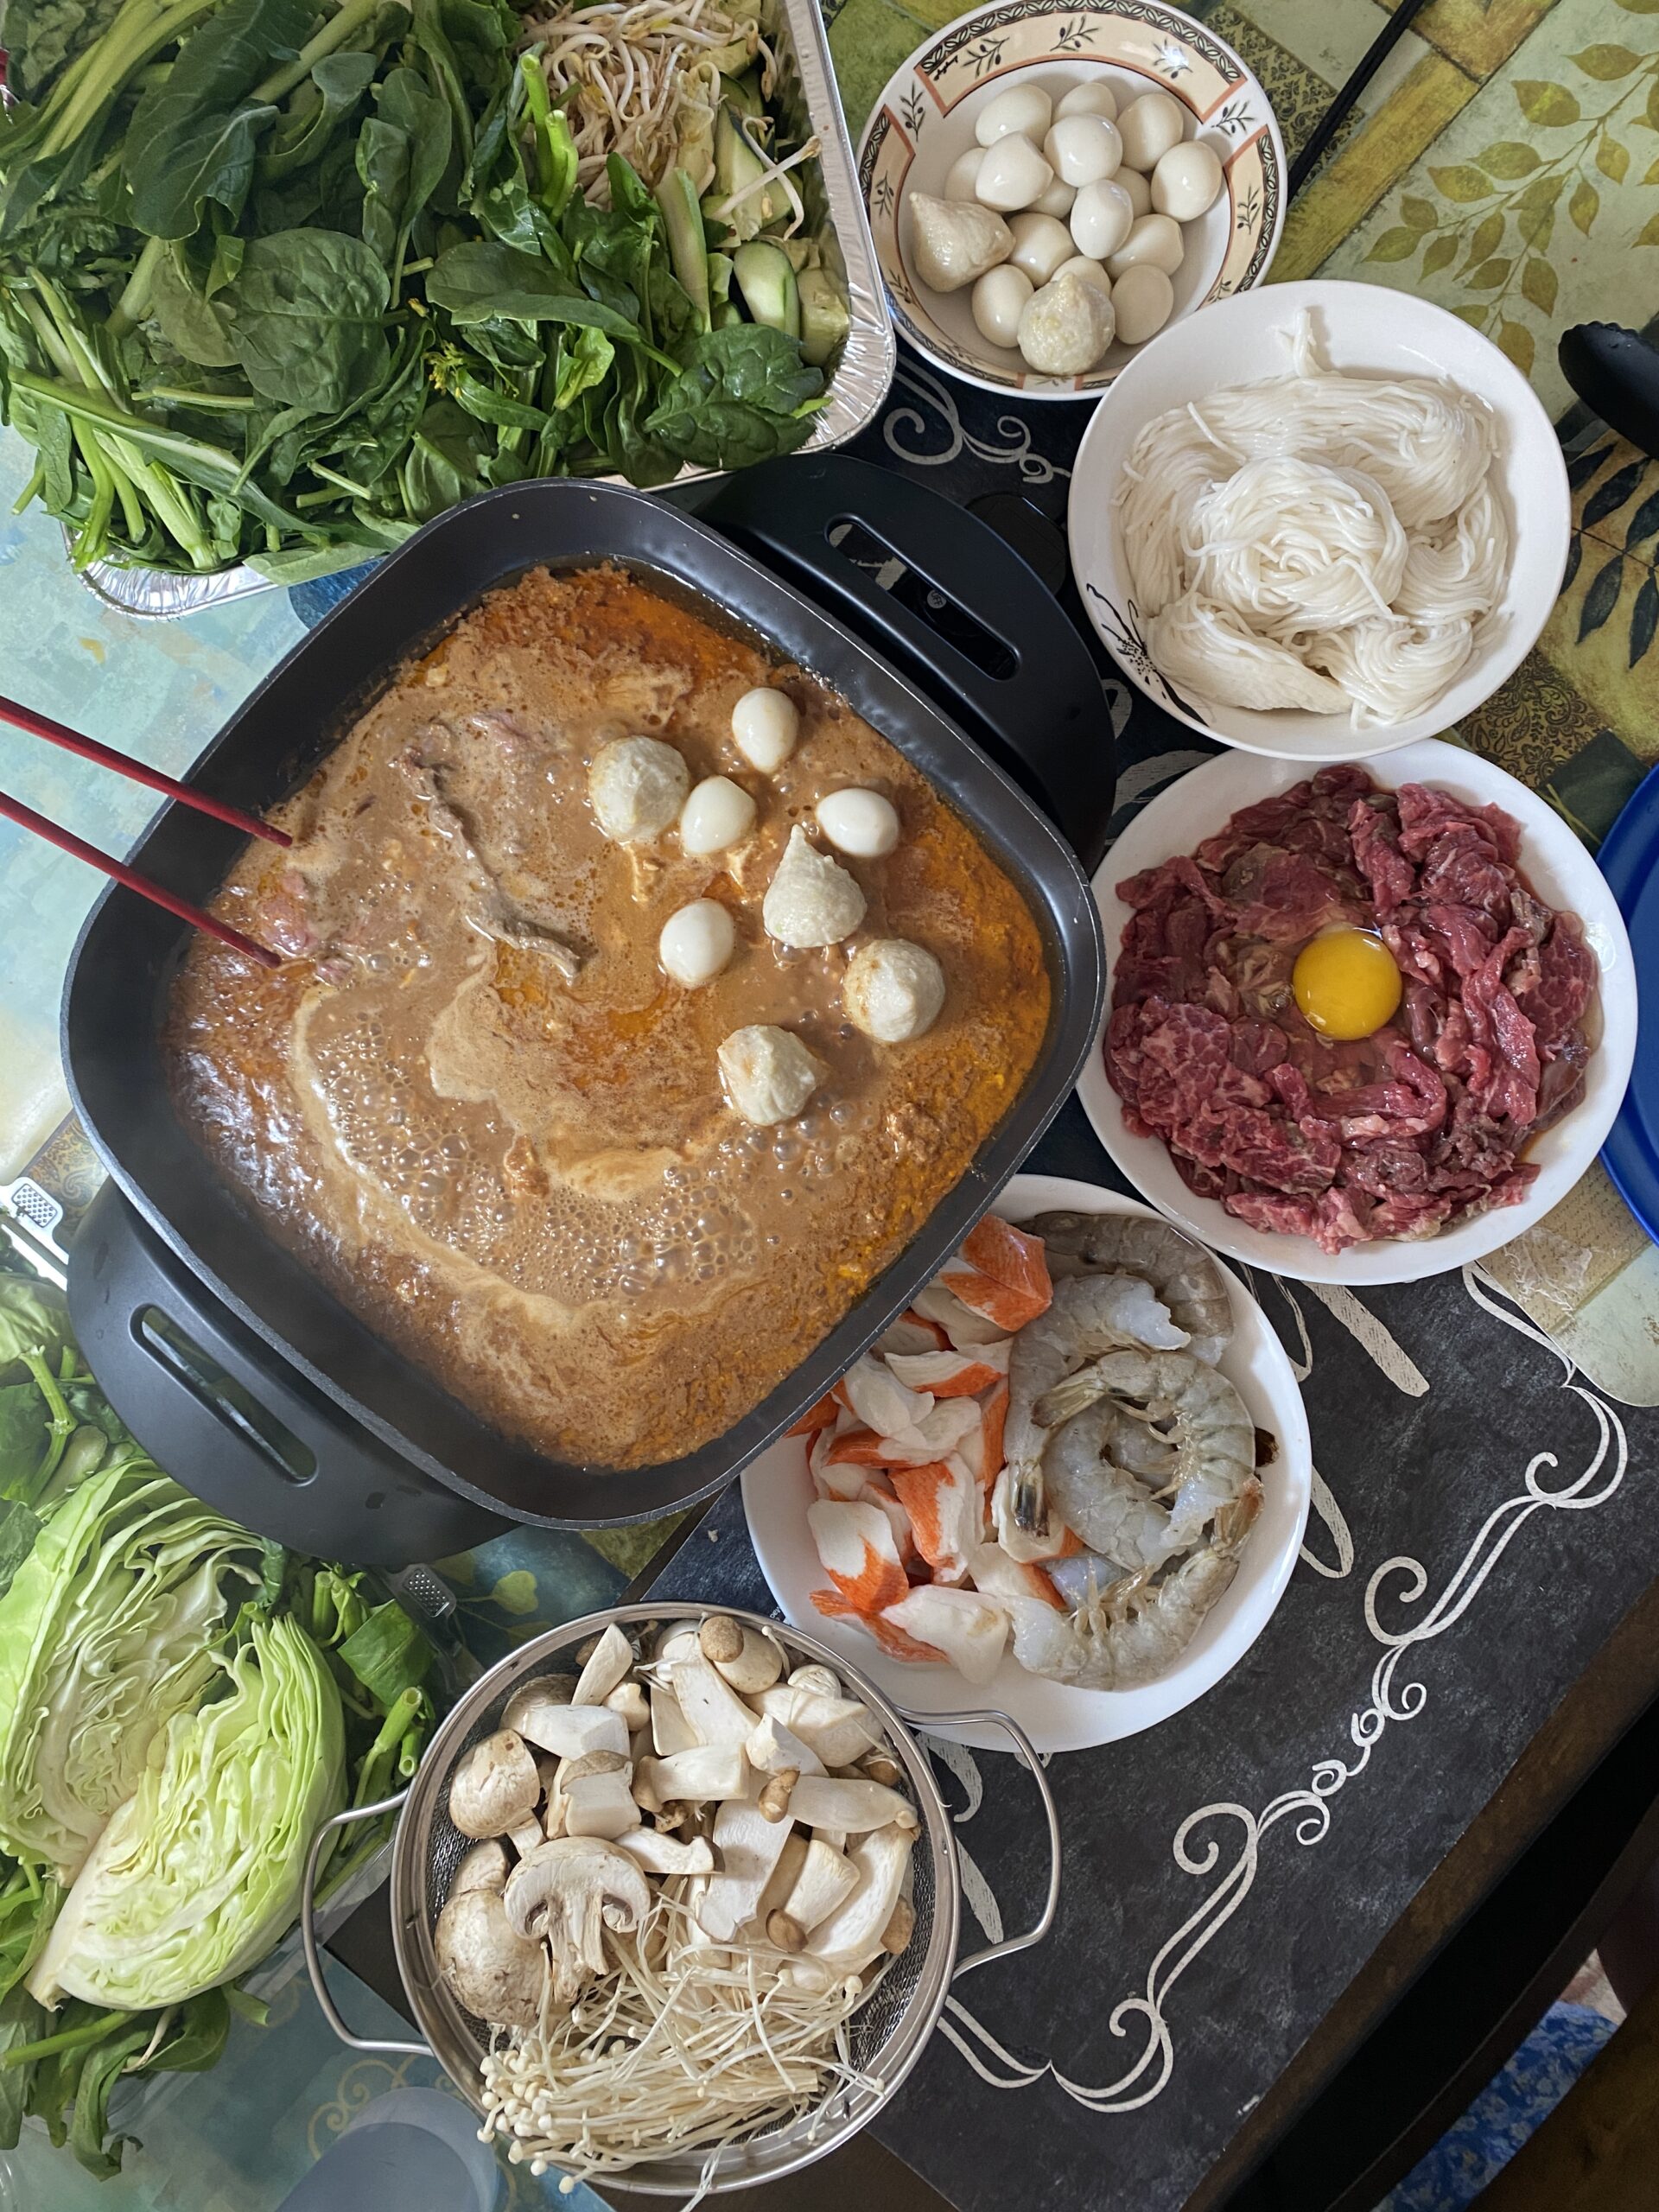 yaohon cambodian hot pot